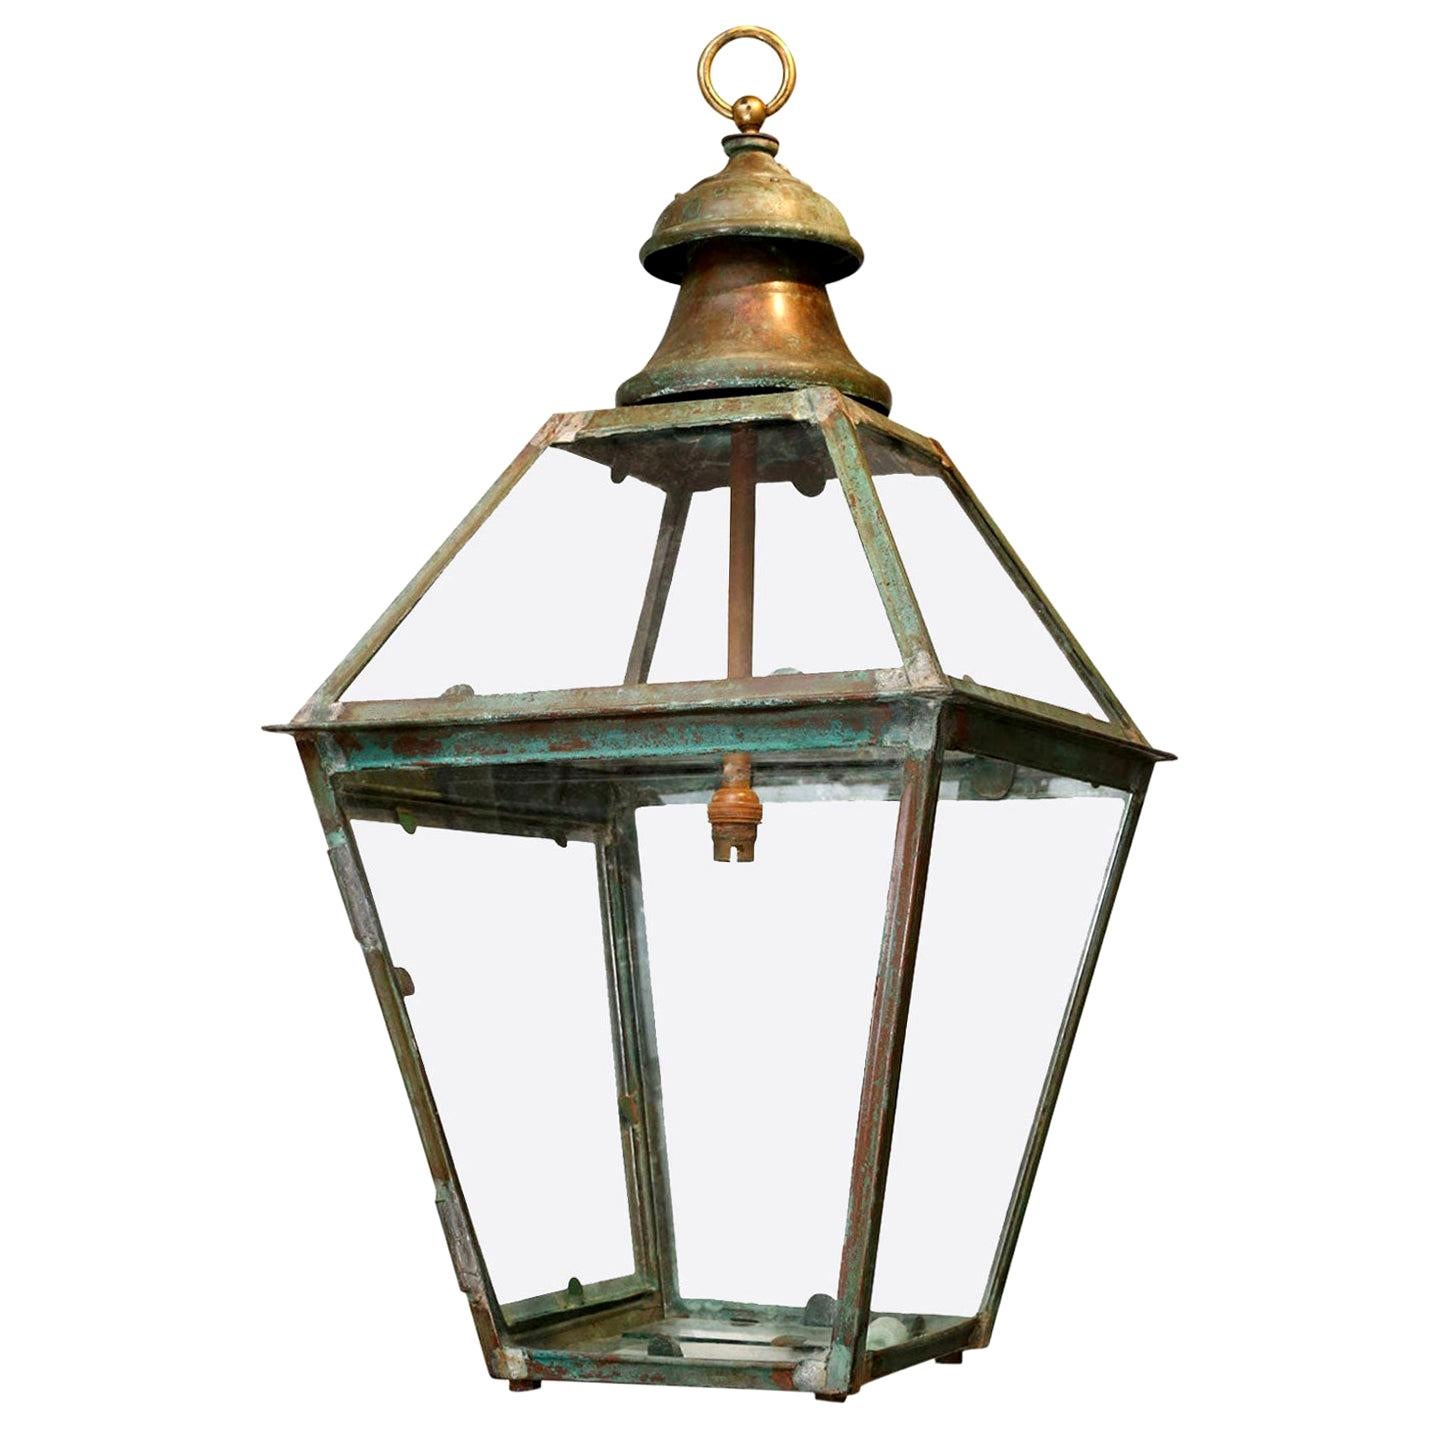 Green-Verdigris Copper and Brass Lantern